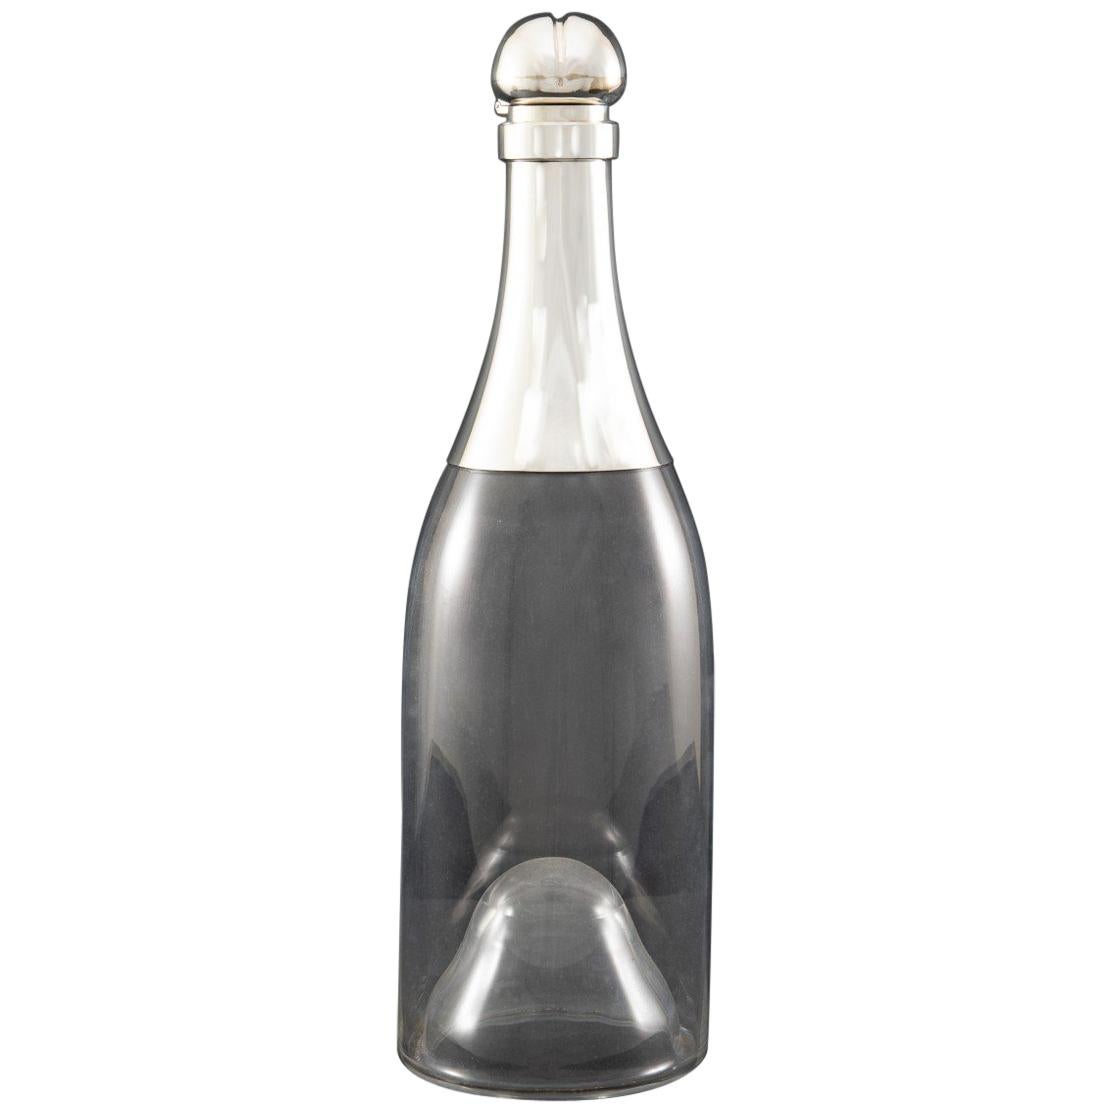 Marie-Jeune Size 'Three Bottles' Champagne Bottle Decanter, Hallmarked 1892